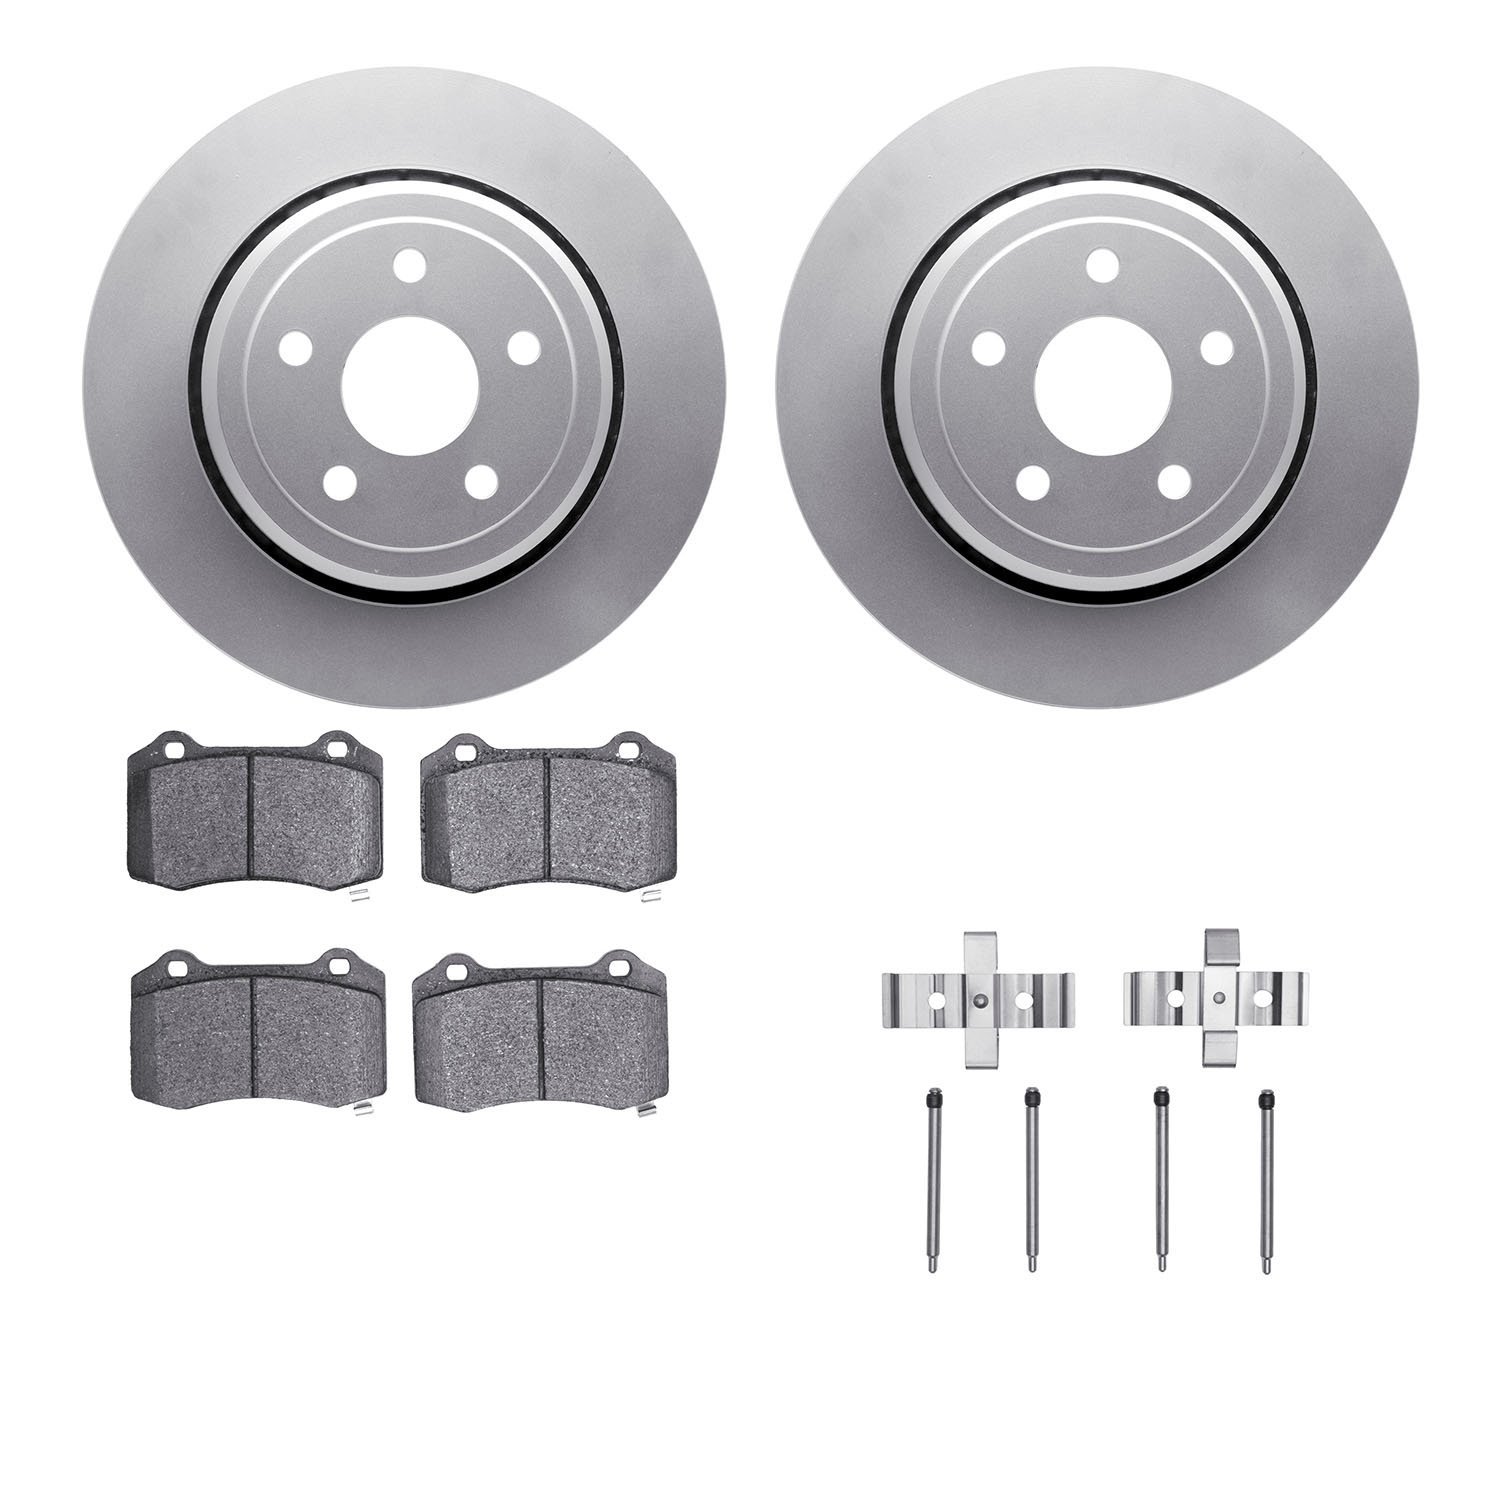 4412-42010 Geospec Brake Rotors with Ultimate-Duty Brake Pads & Hardware, Fits Select Mopar, Position: Rear